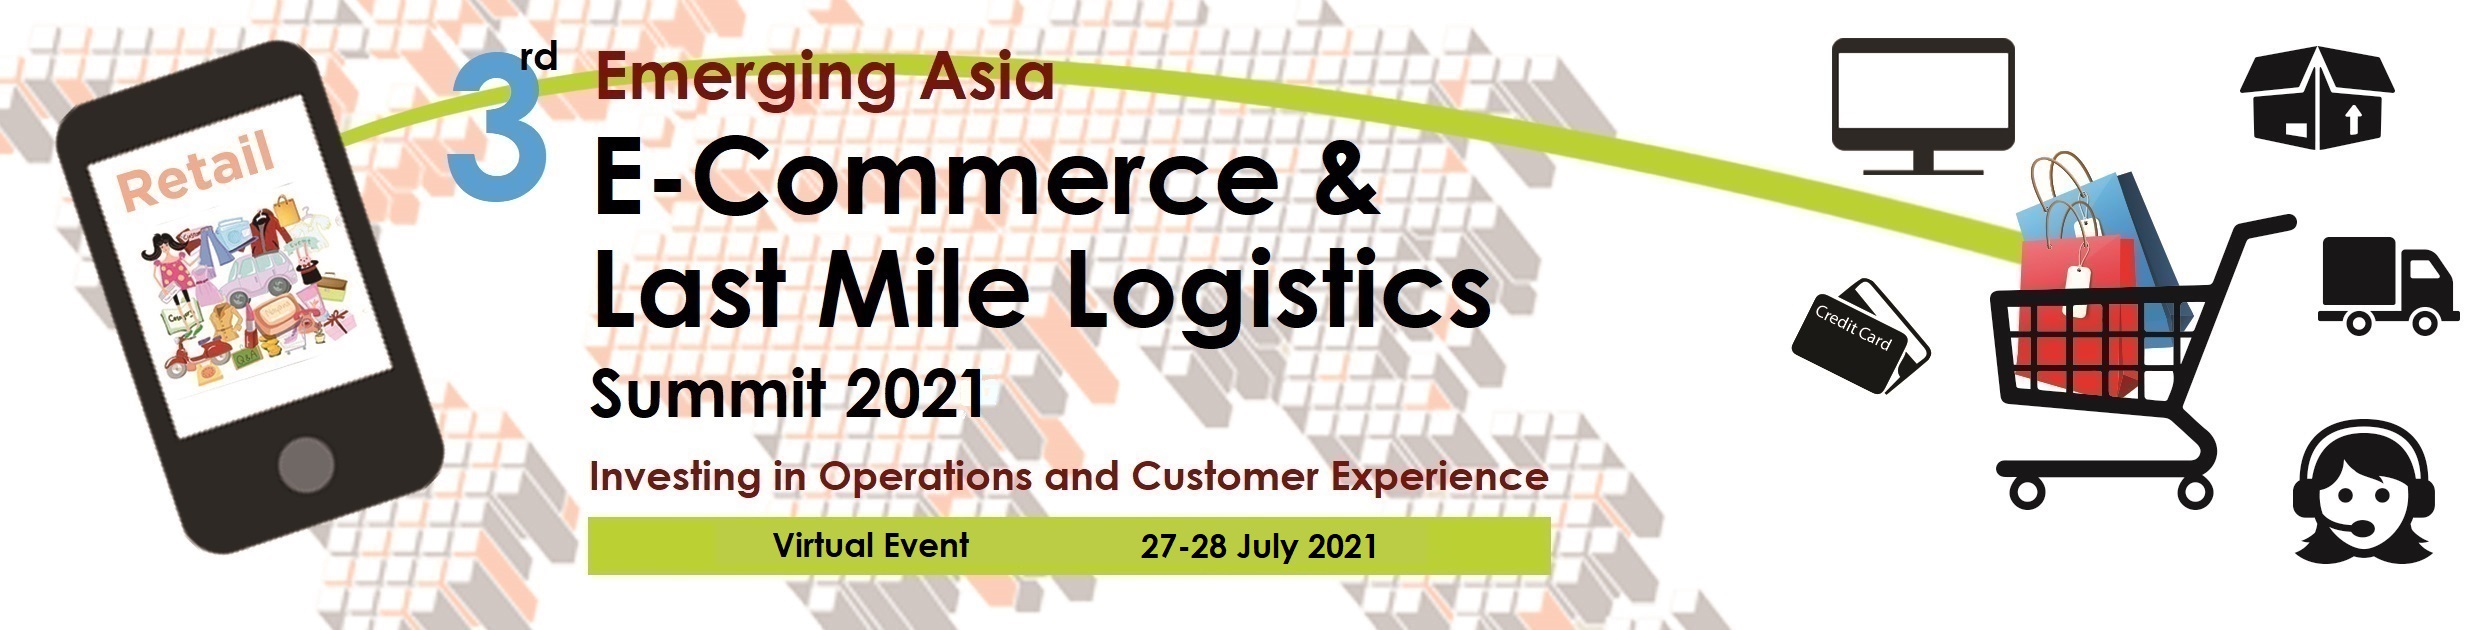 3rd Emerging Asia E-Commerce & Last Mile Logistics Virtual Summit 2021 organized by Magenta Global Pte Ltd